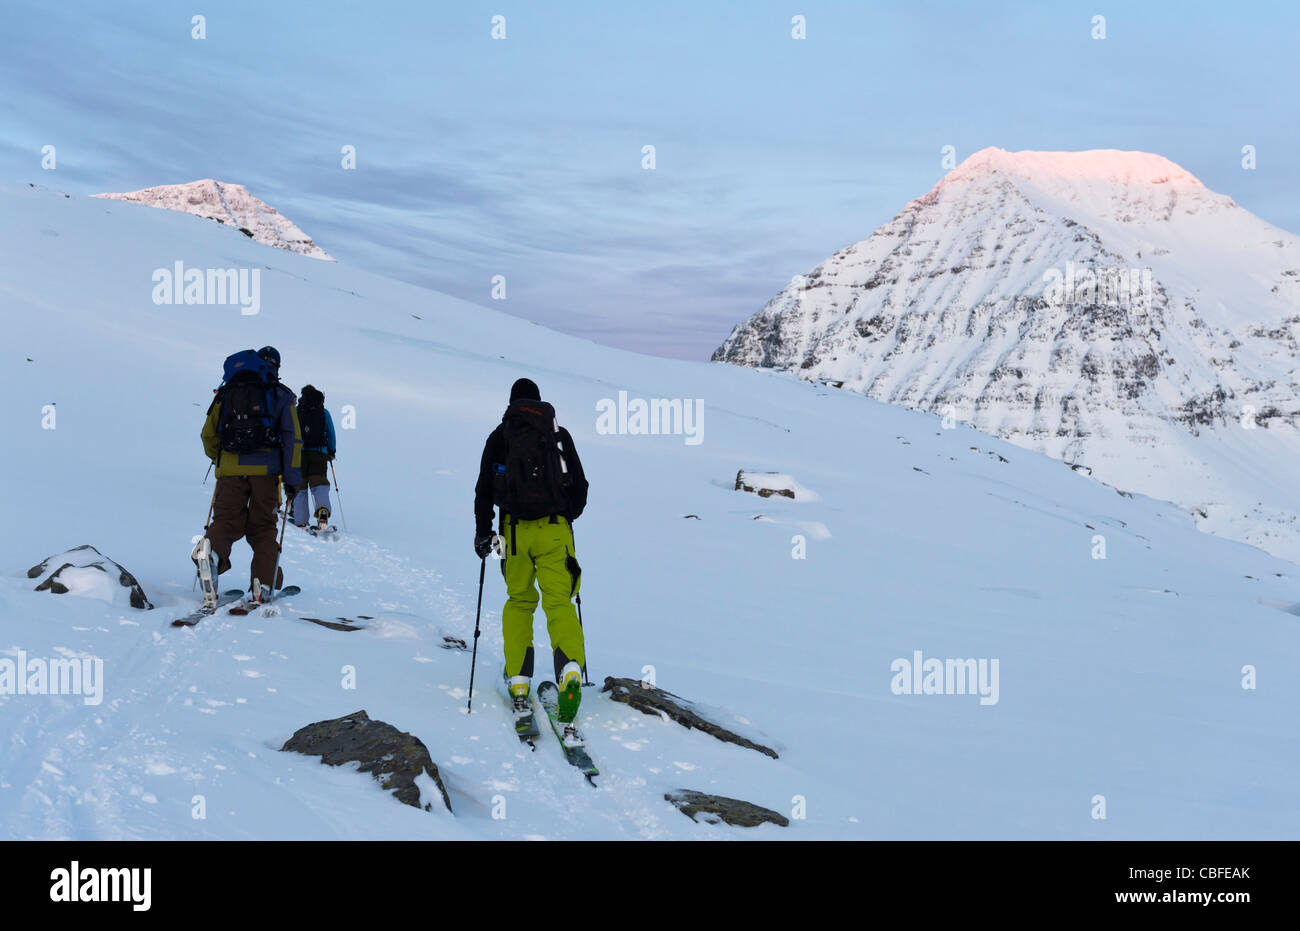 Ski-touring in Tamok, northern Norway during the polar night season. Stock Photo